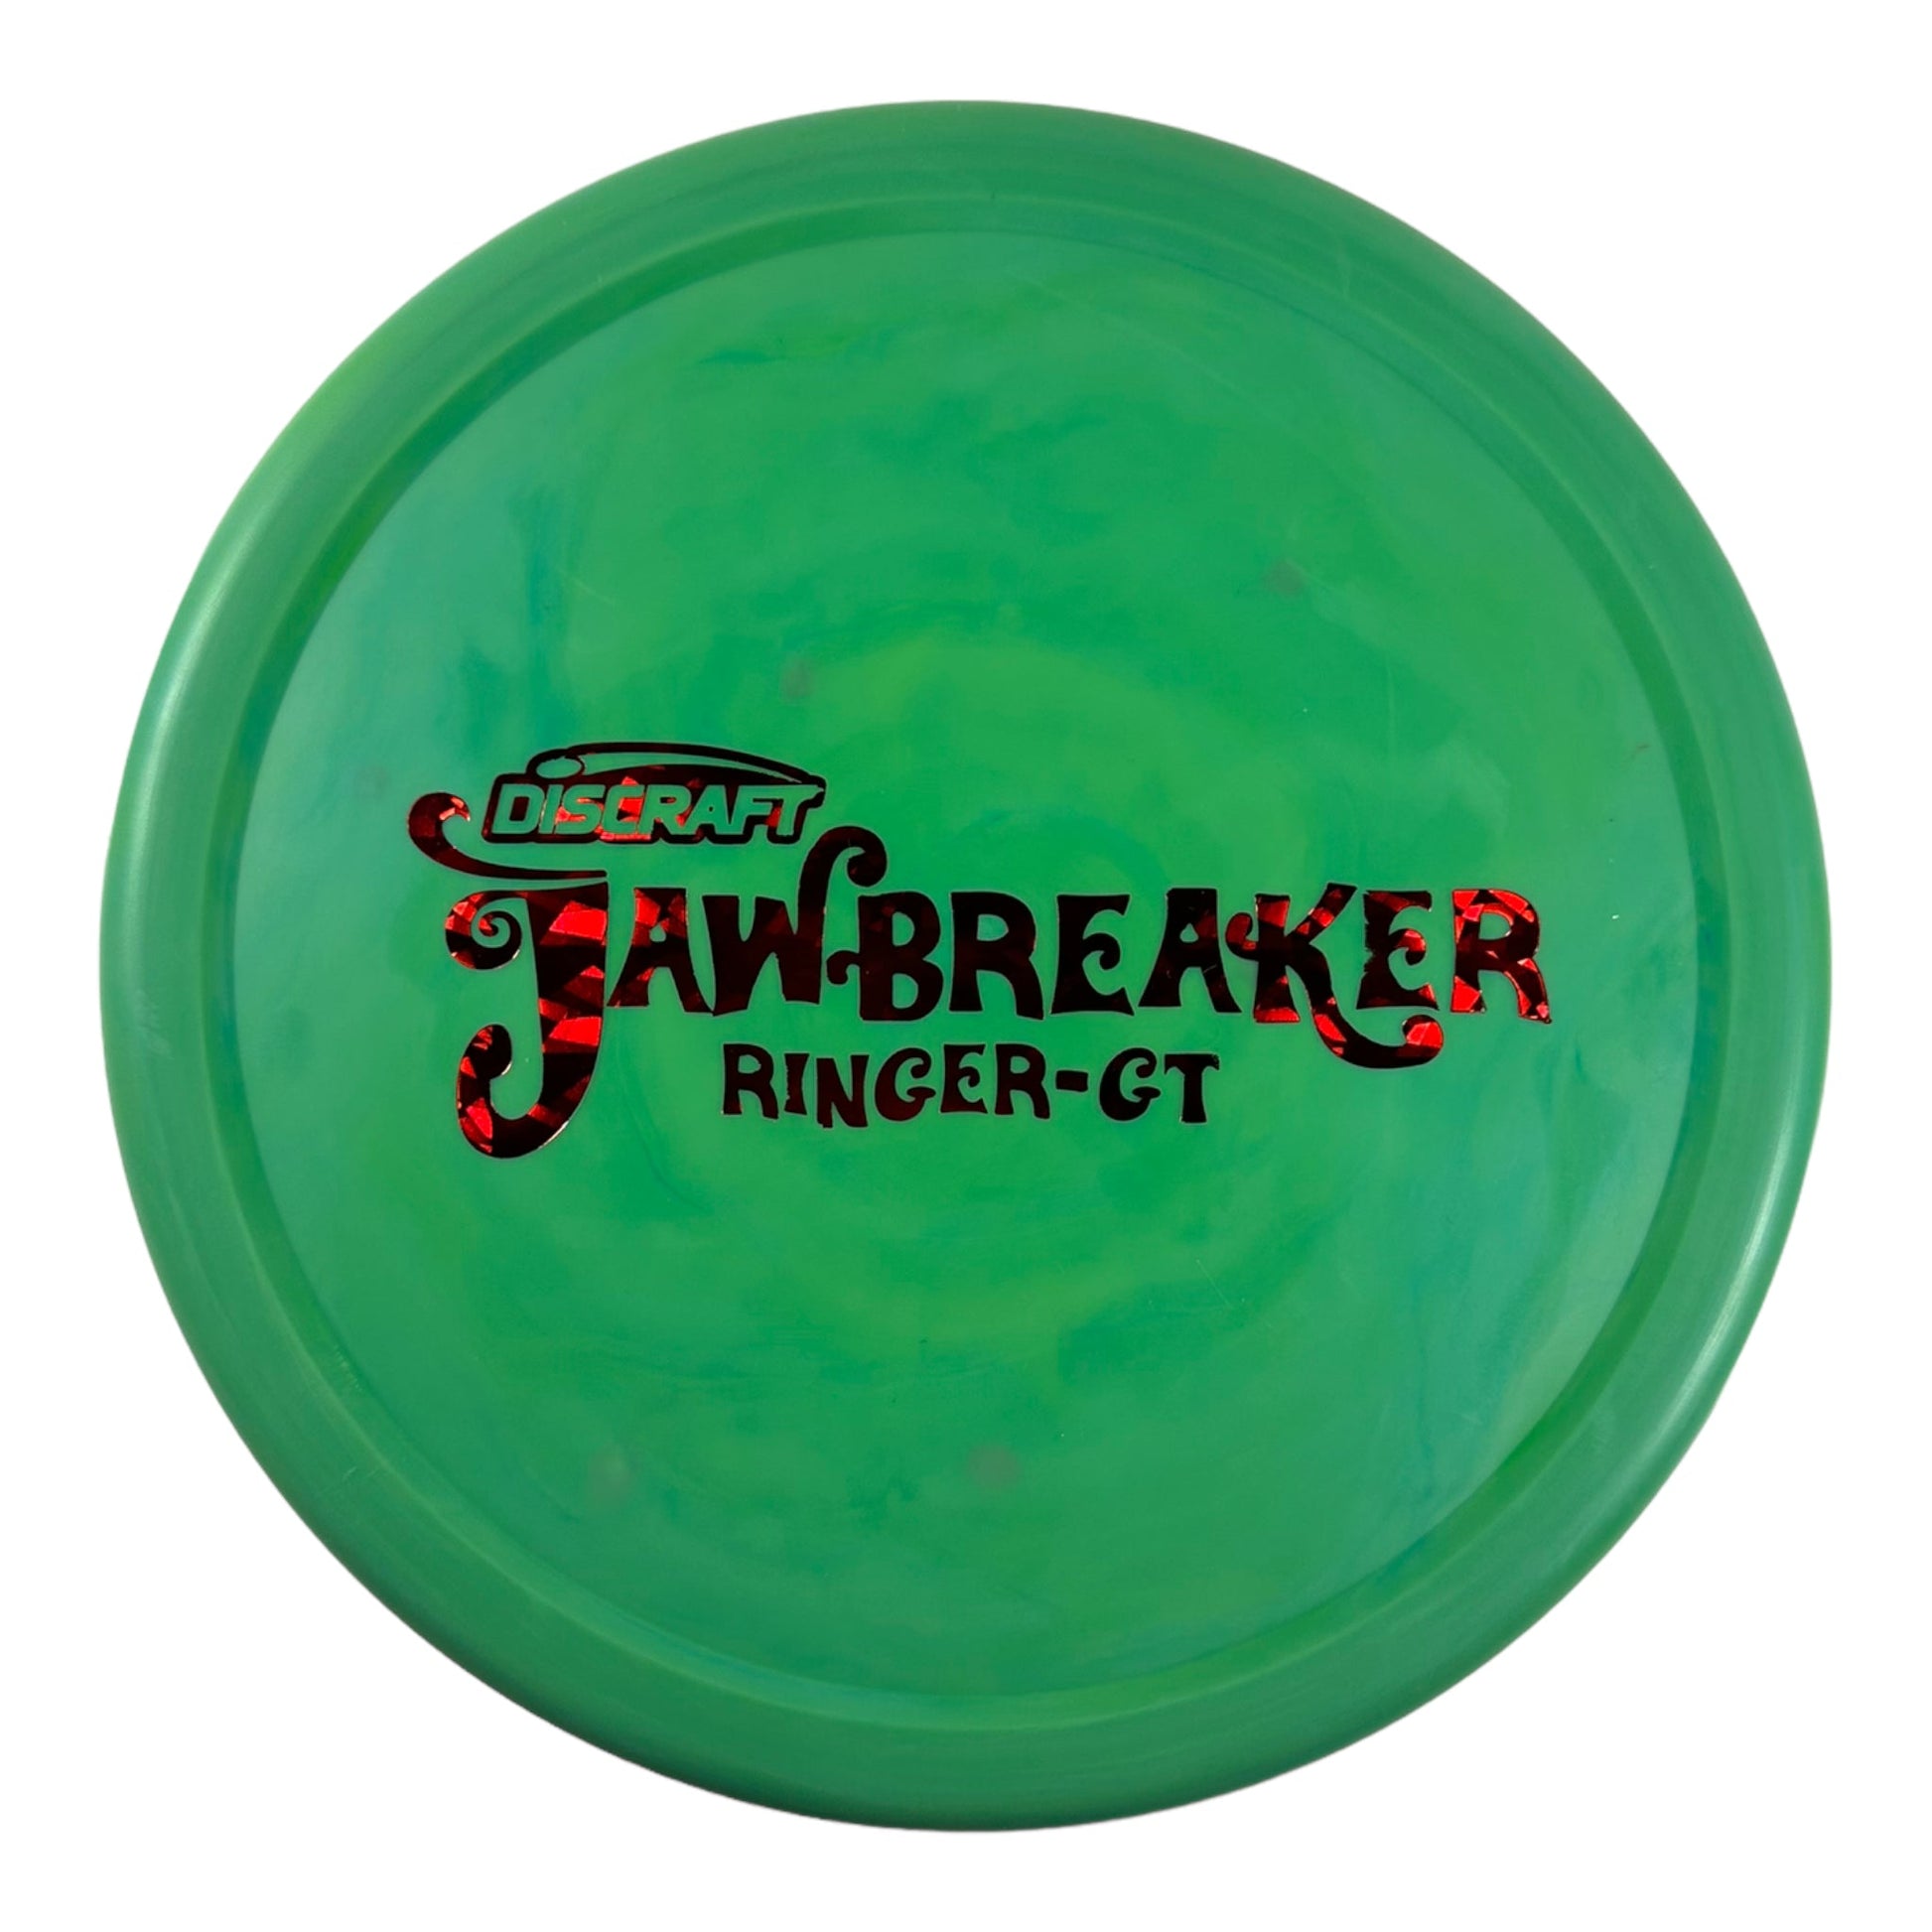 Discraft Ringer-GT | Jawbreaker | Green/Red 170g Disc Golf